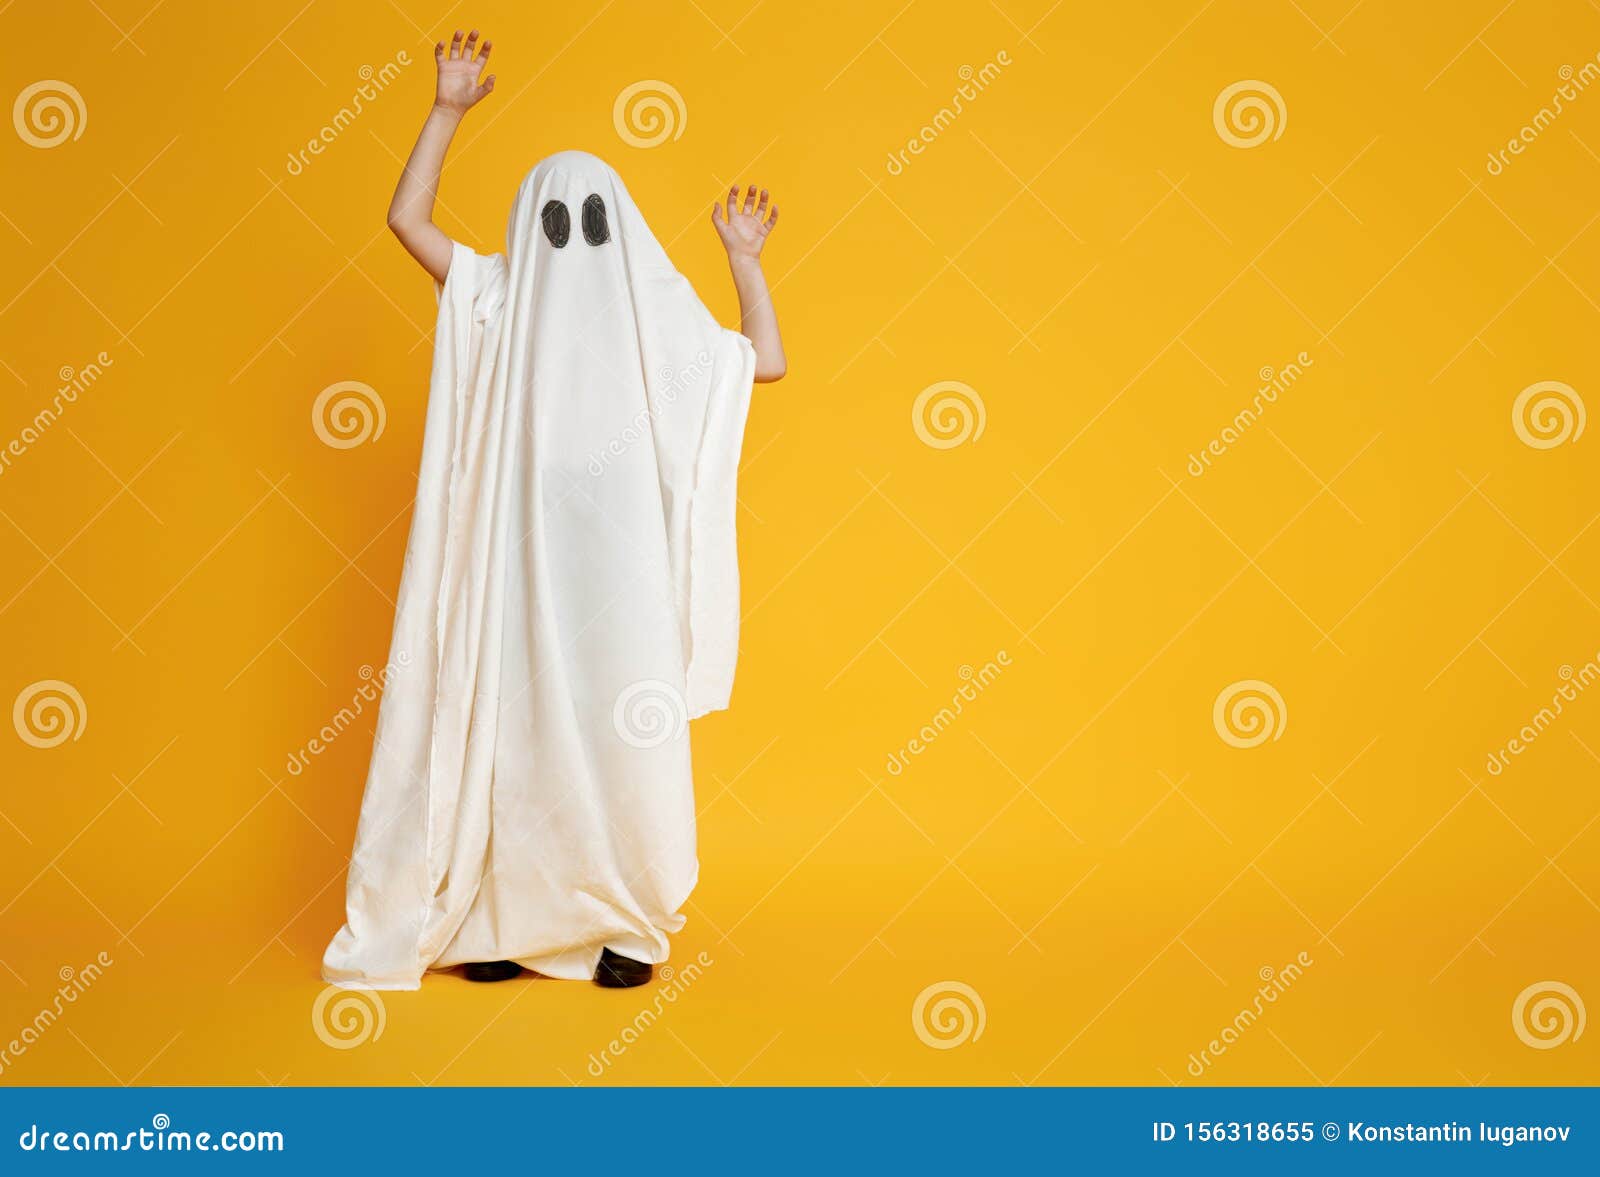 kid in ghost costume